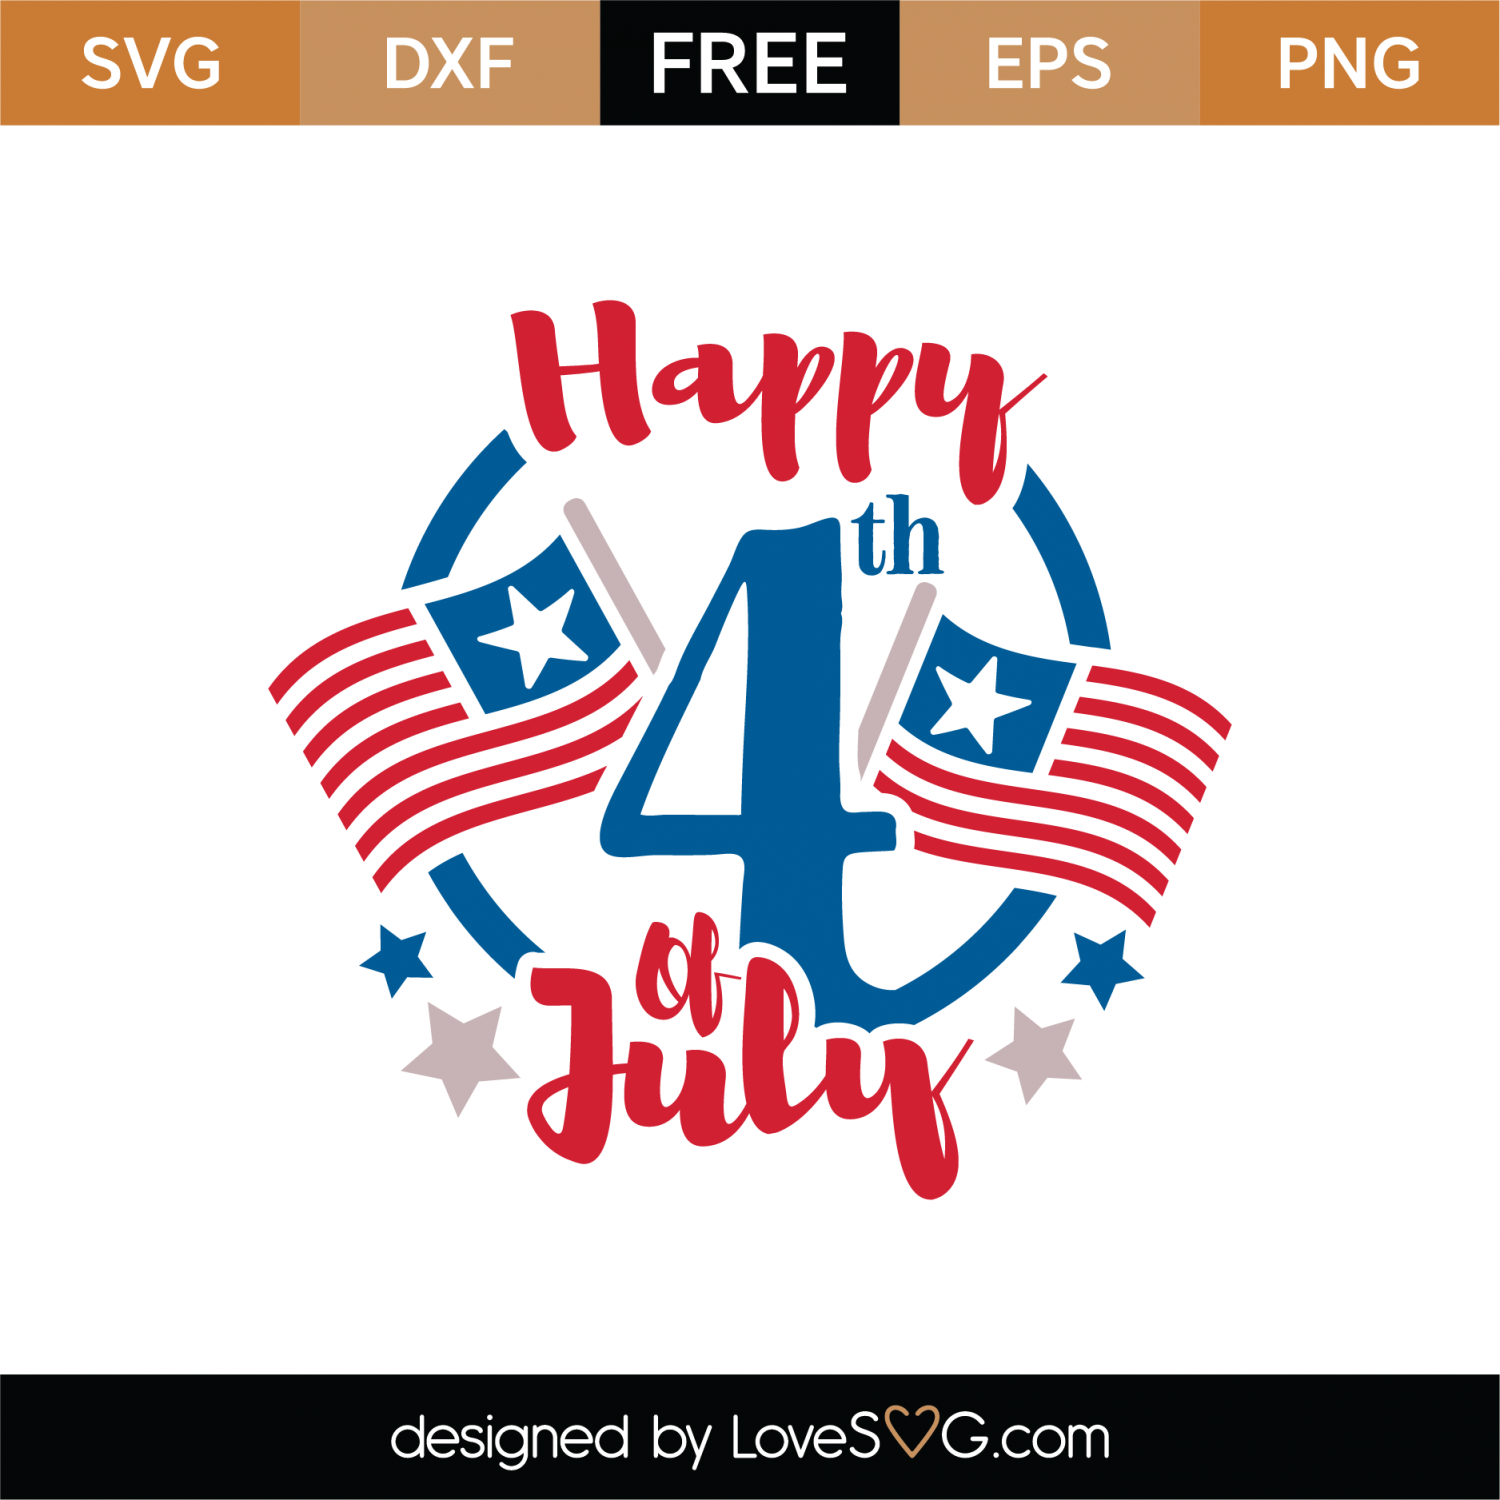 Free Happy 4th of July SVG Cut File | Lovesvg.com